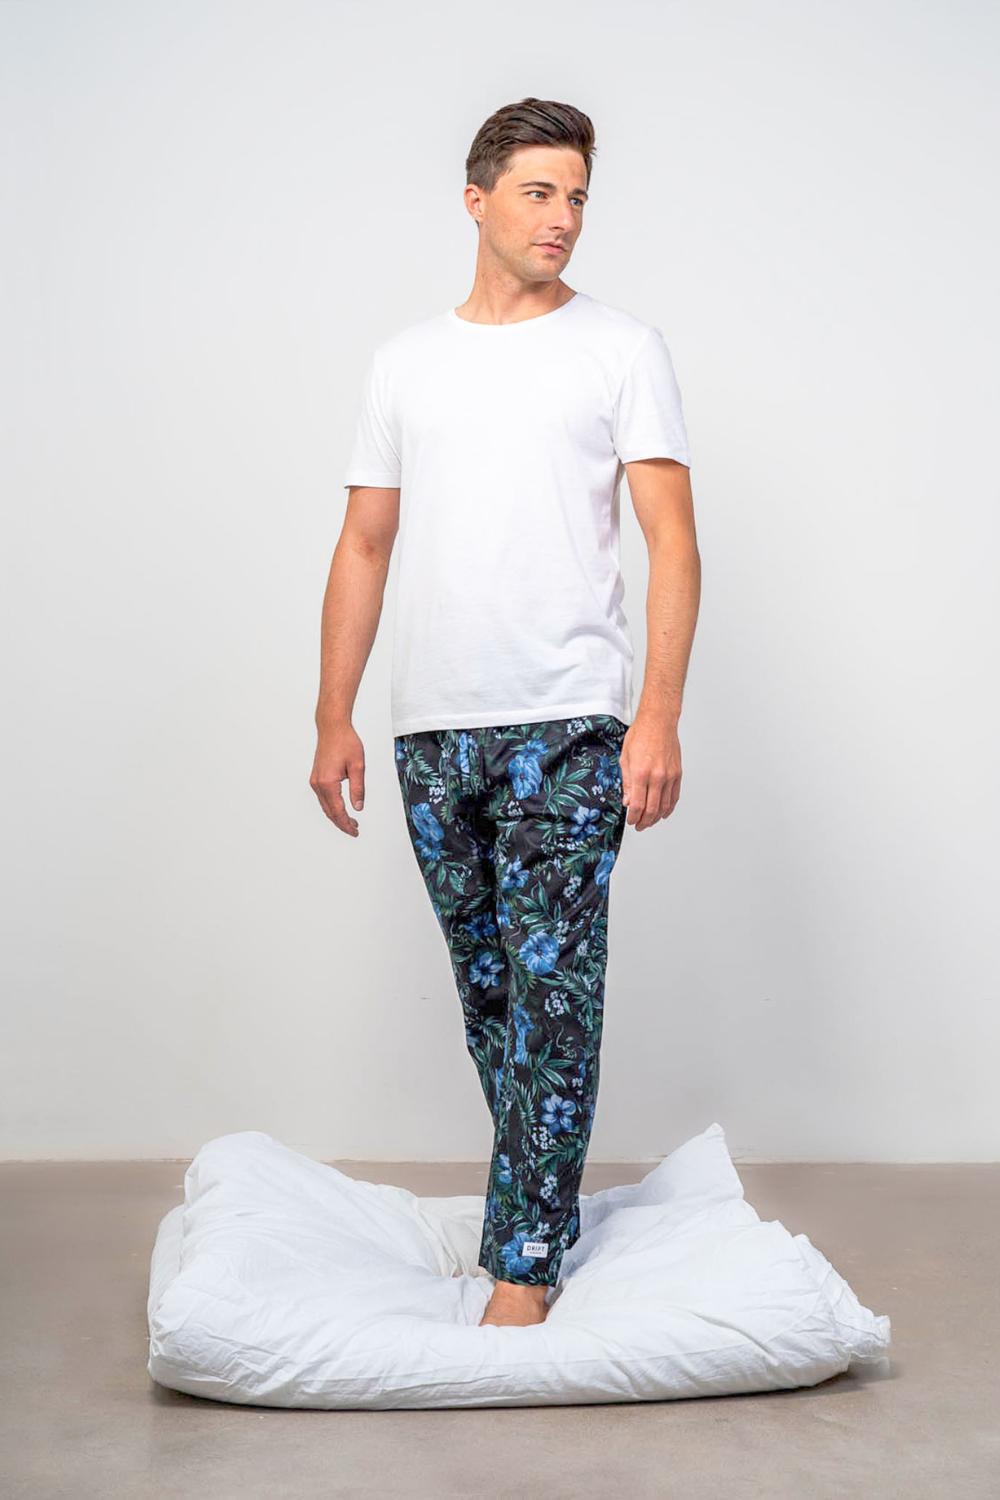 Men's midsummer pyjama bottoms set for men worn by model